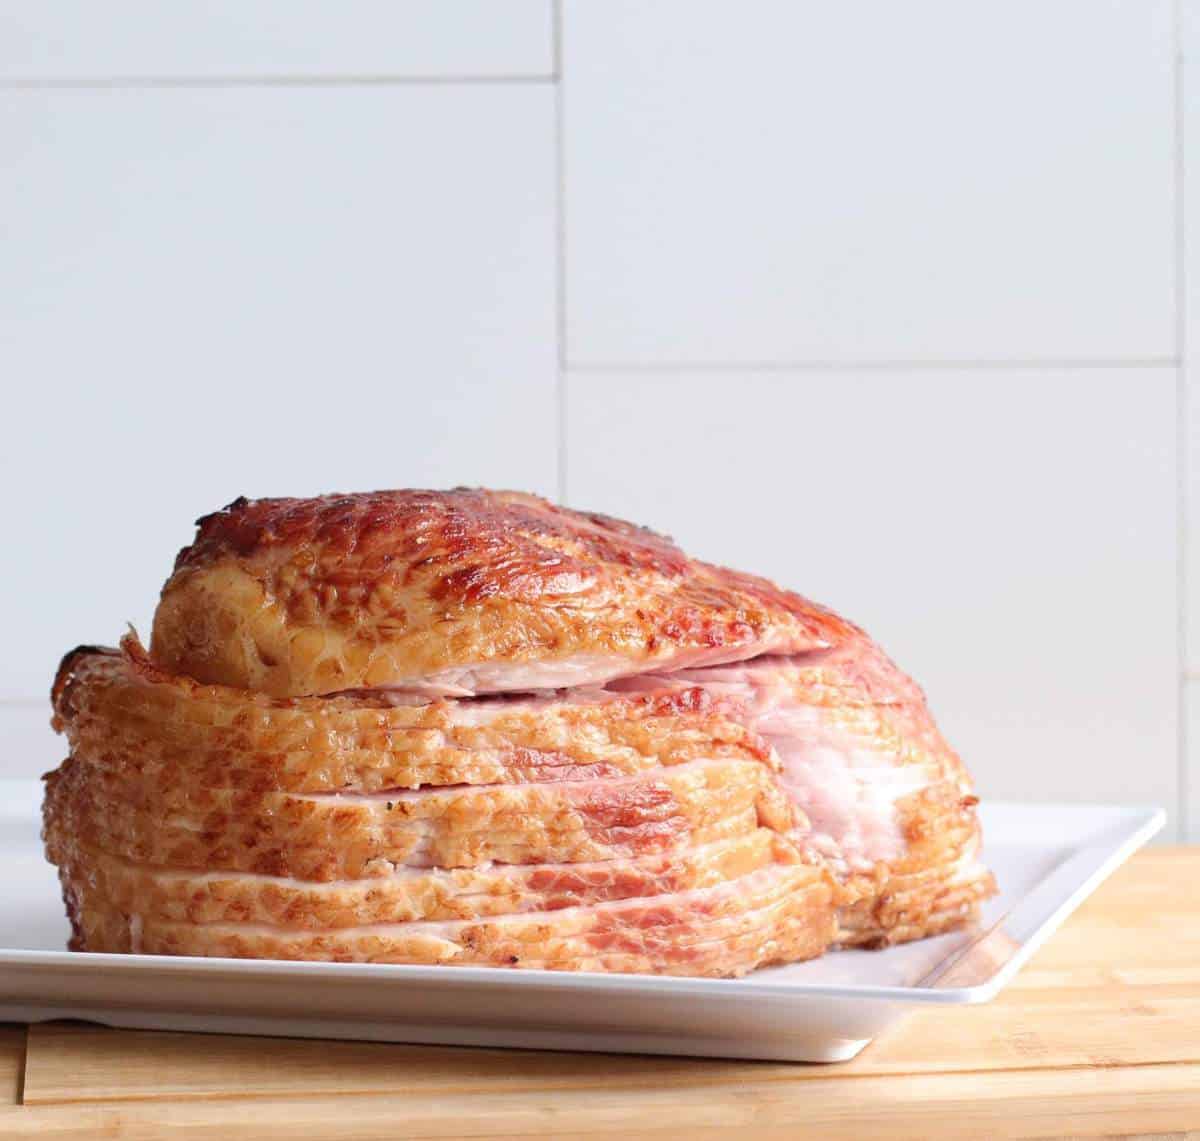 A sliced ham on a white plate.